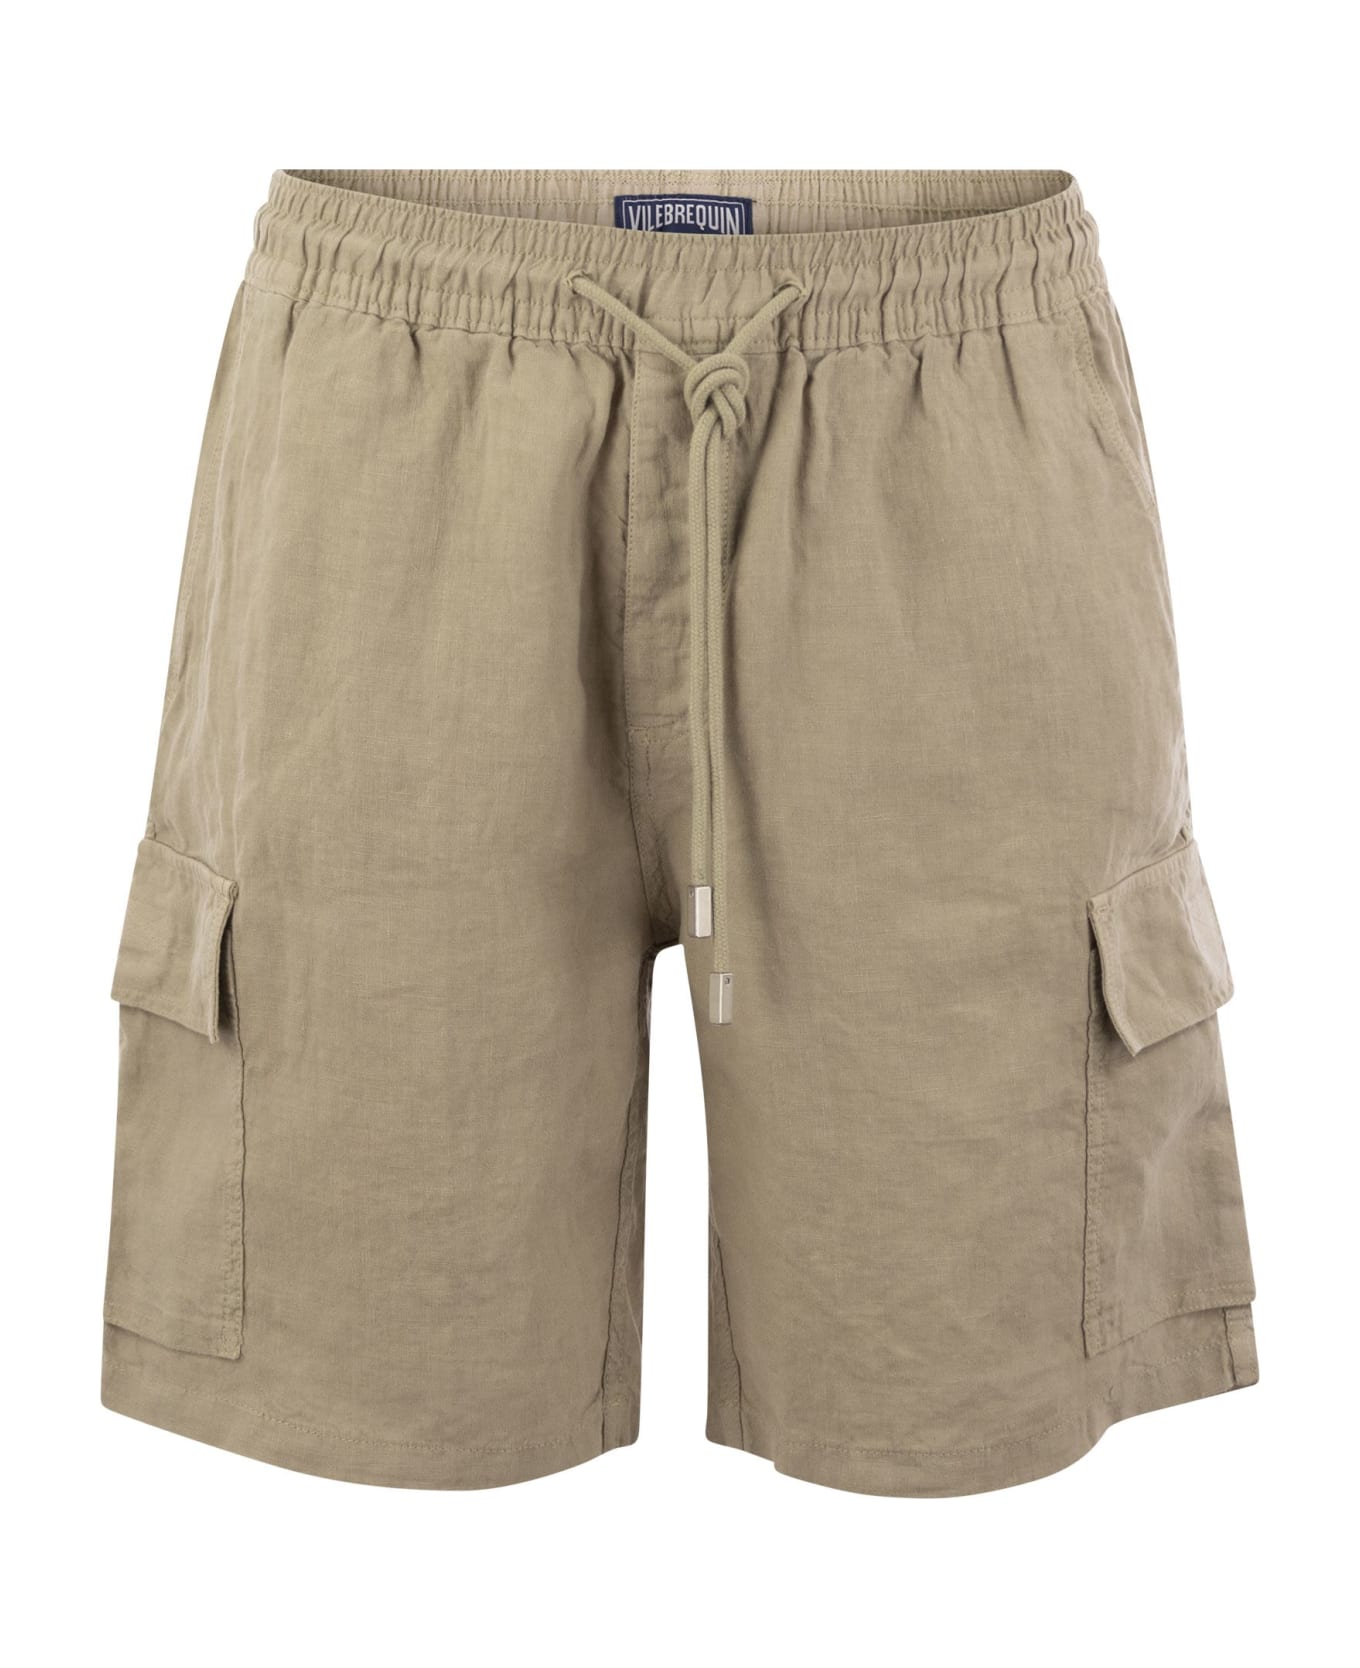 Vilebrequin Linen Cargo Bermuda Shorts - Sand ショートパンツ